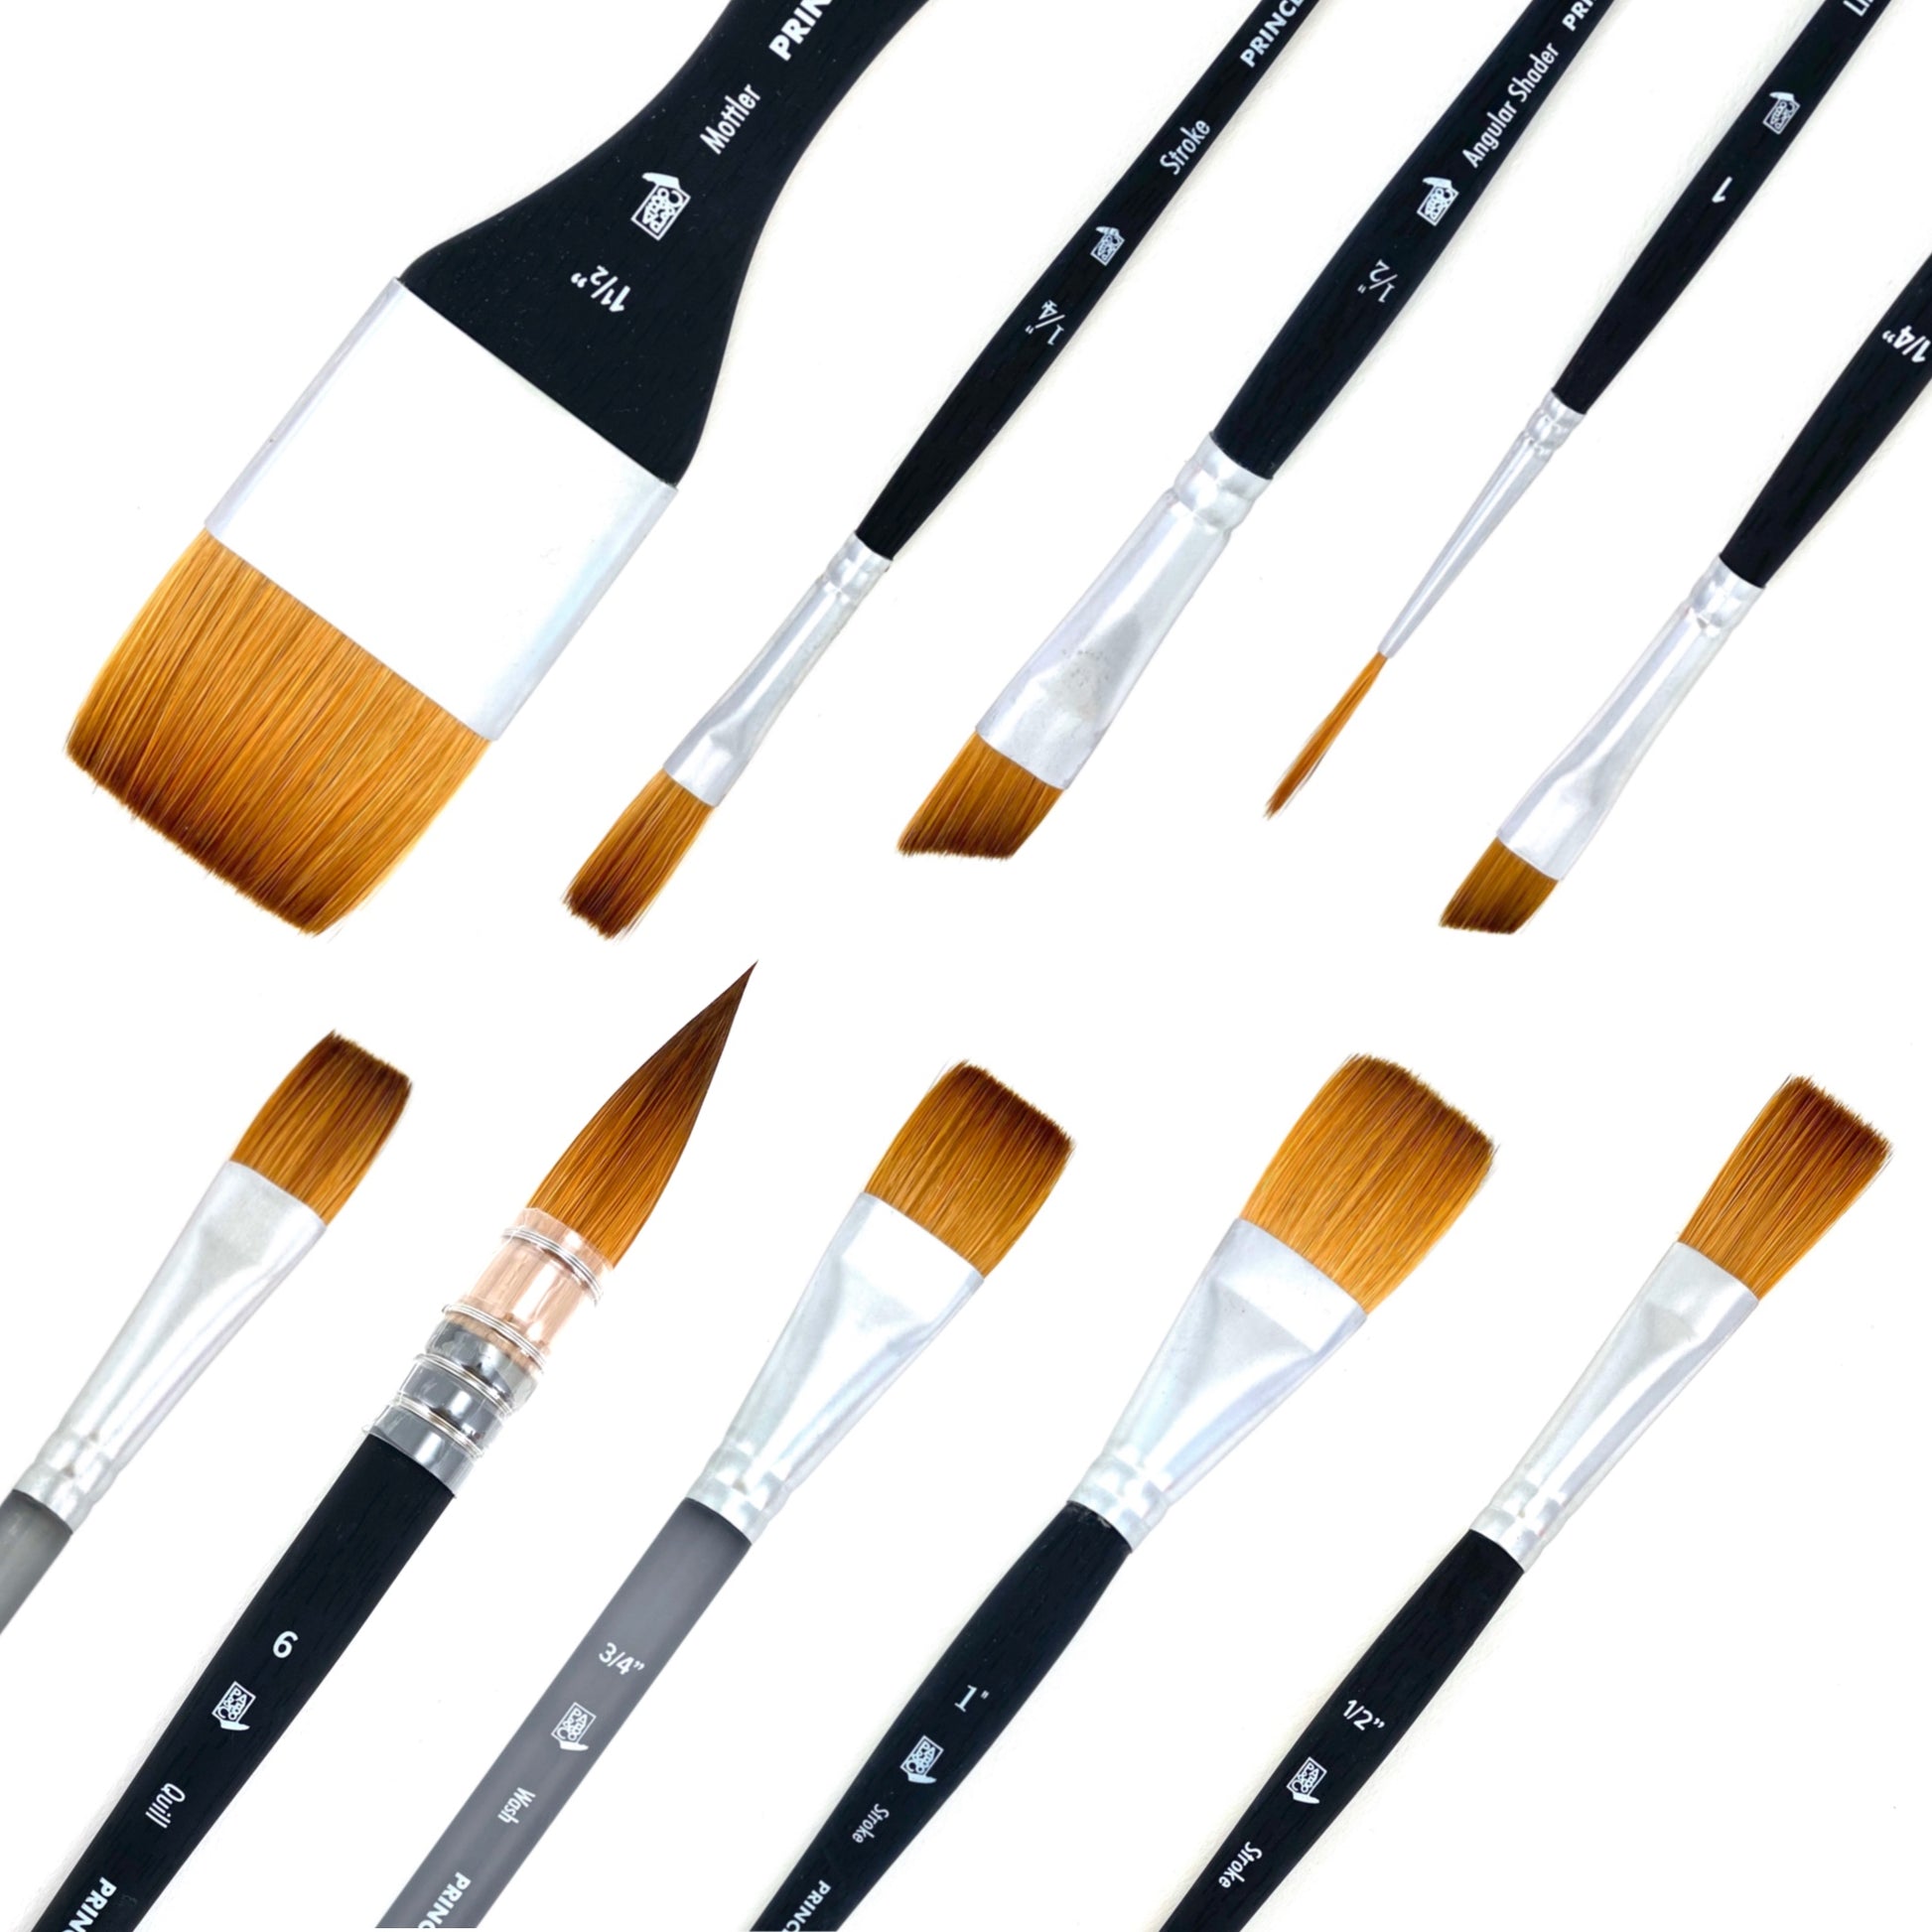 Brush Sets - Princeton Brush Company